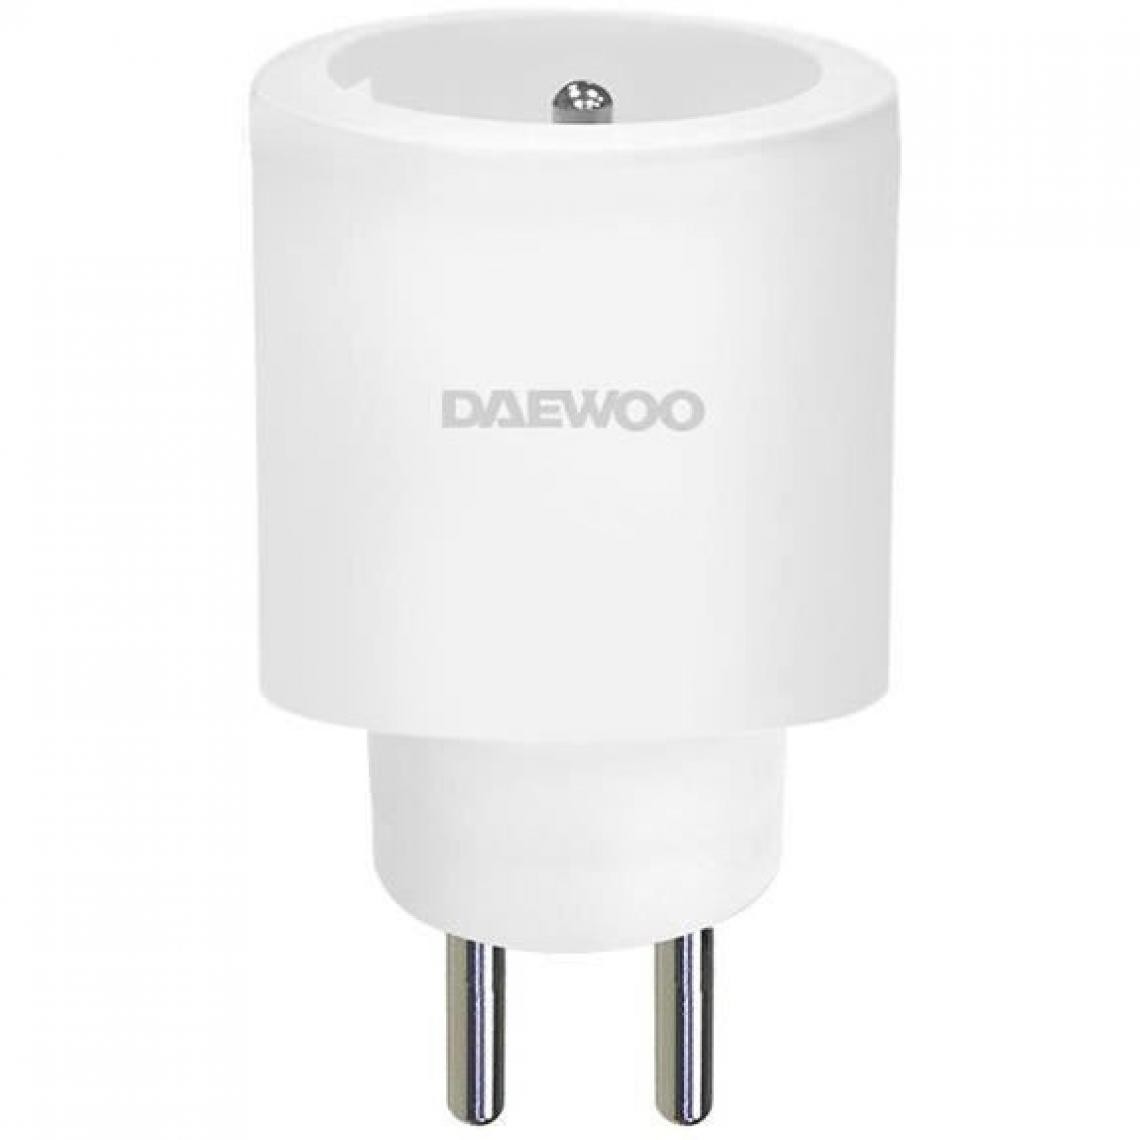 Daewoo - Daewoo Prise connectée SP501F - Prises programmables